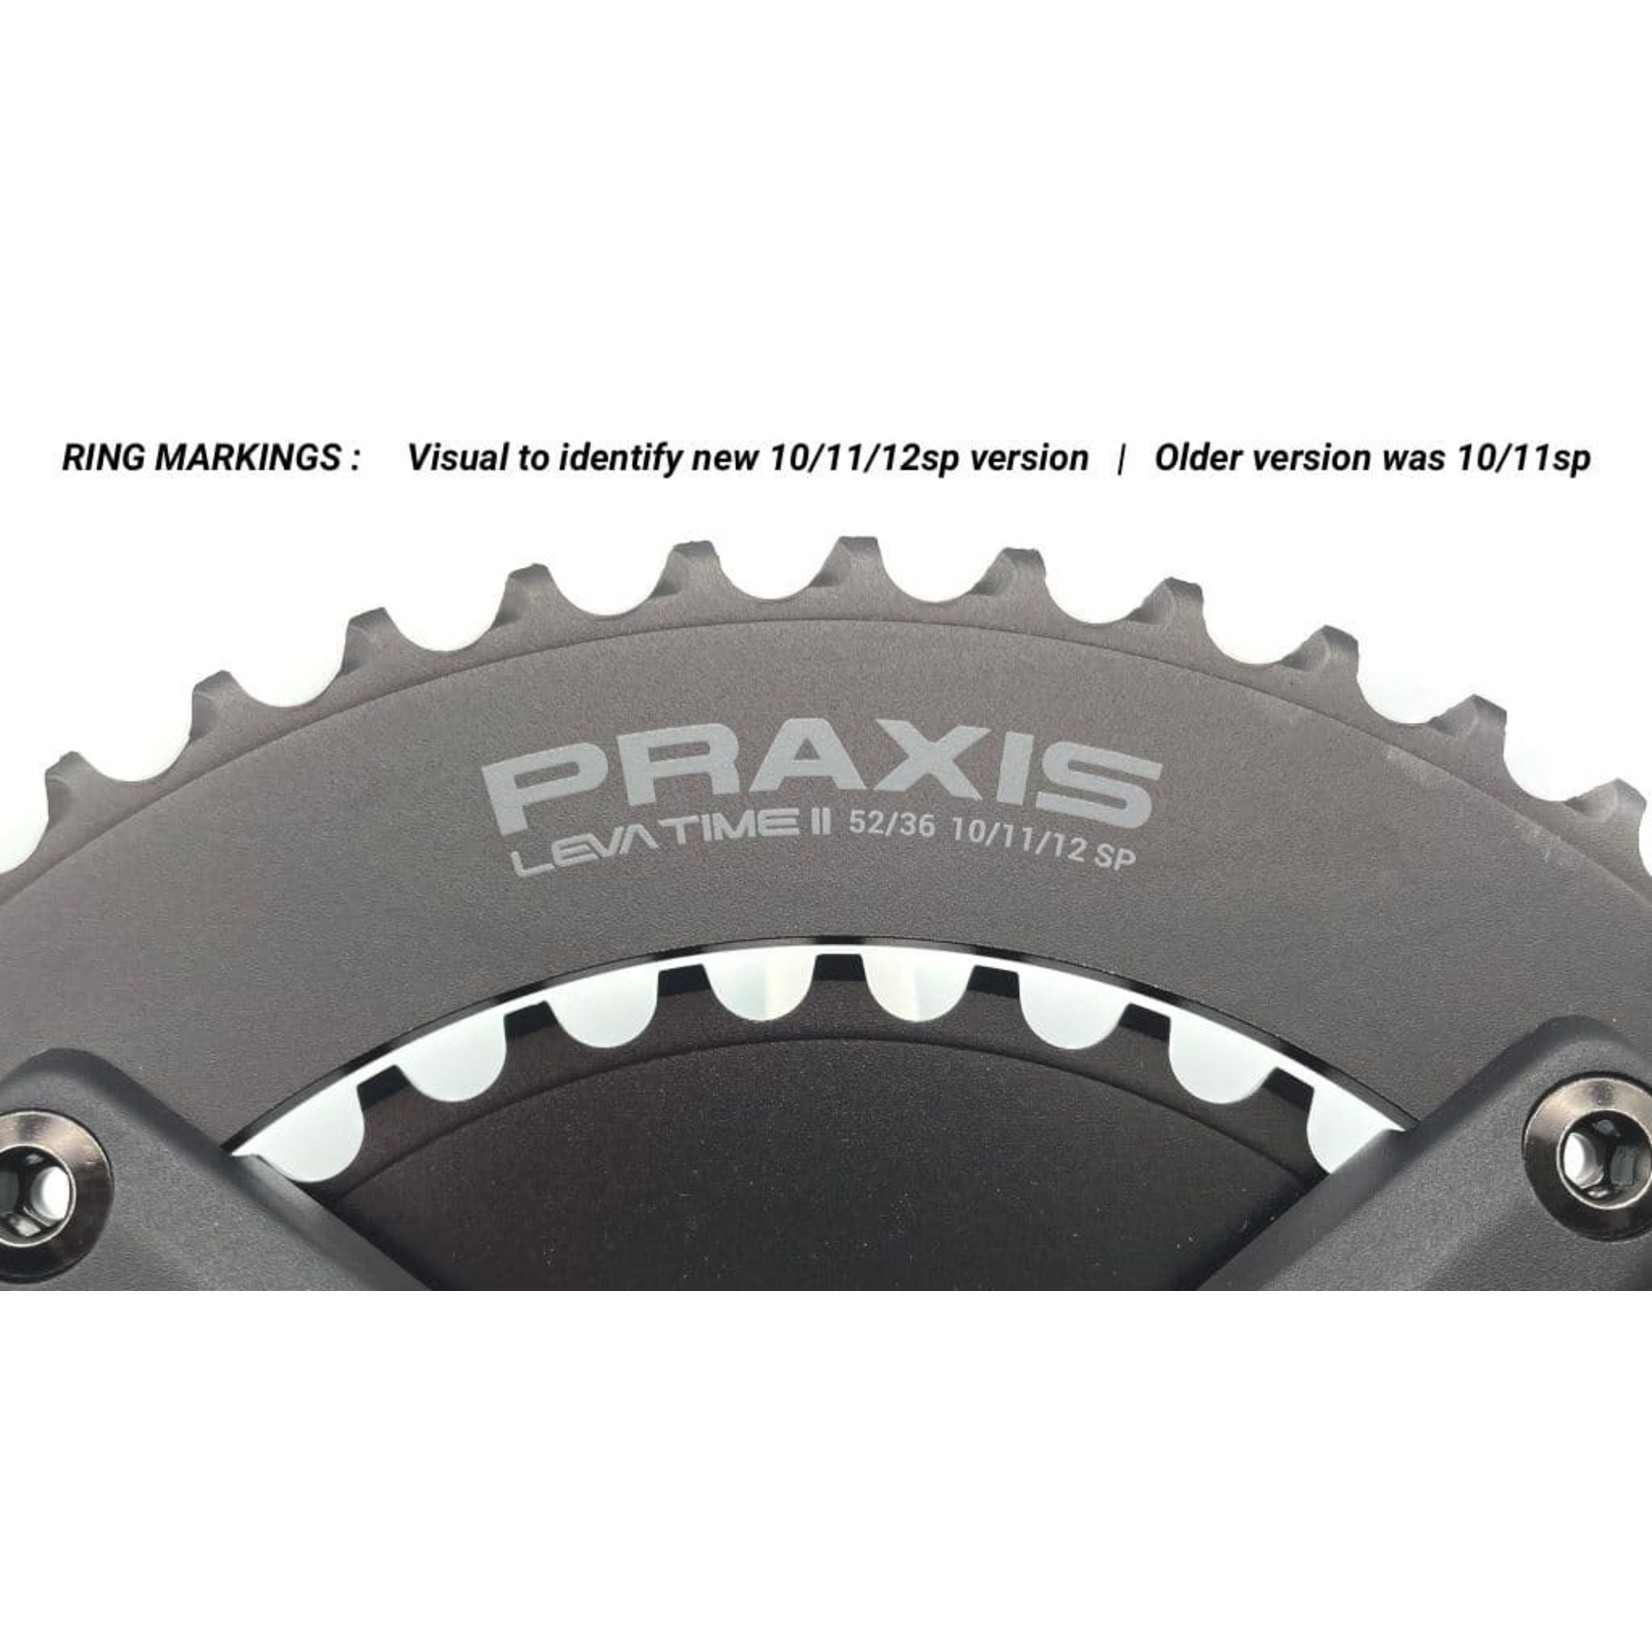 Praxis Praxis Road cranks - Zayante - Carbon-S,175mm 48/32